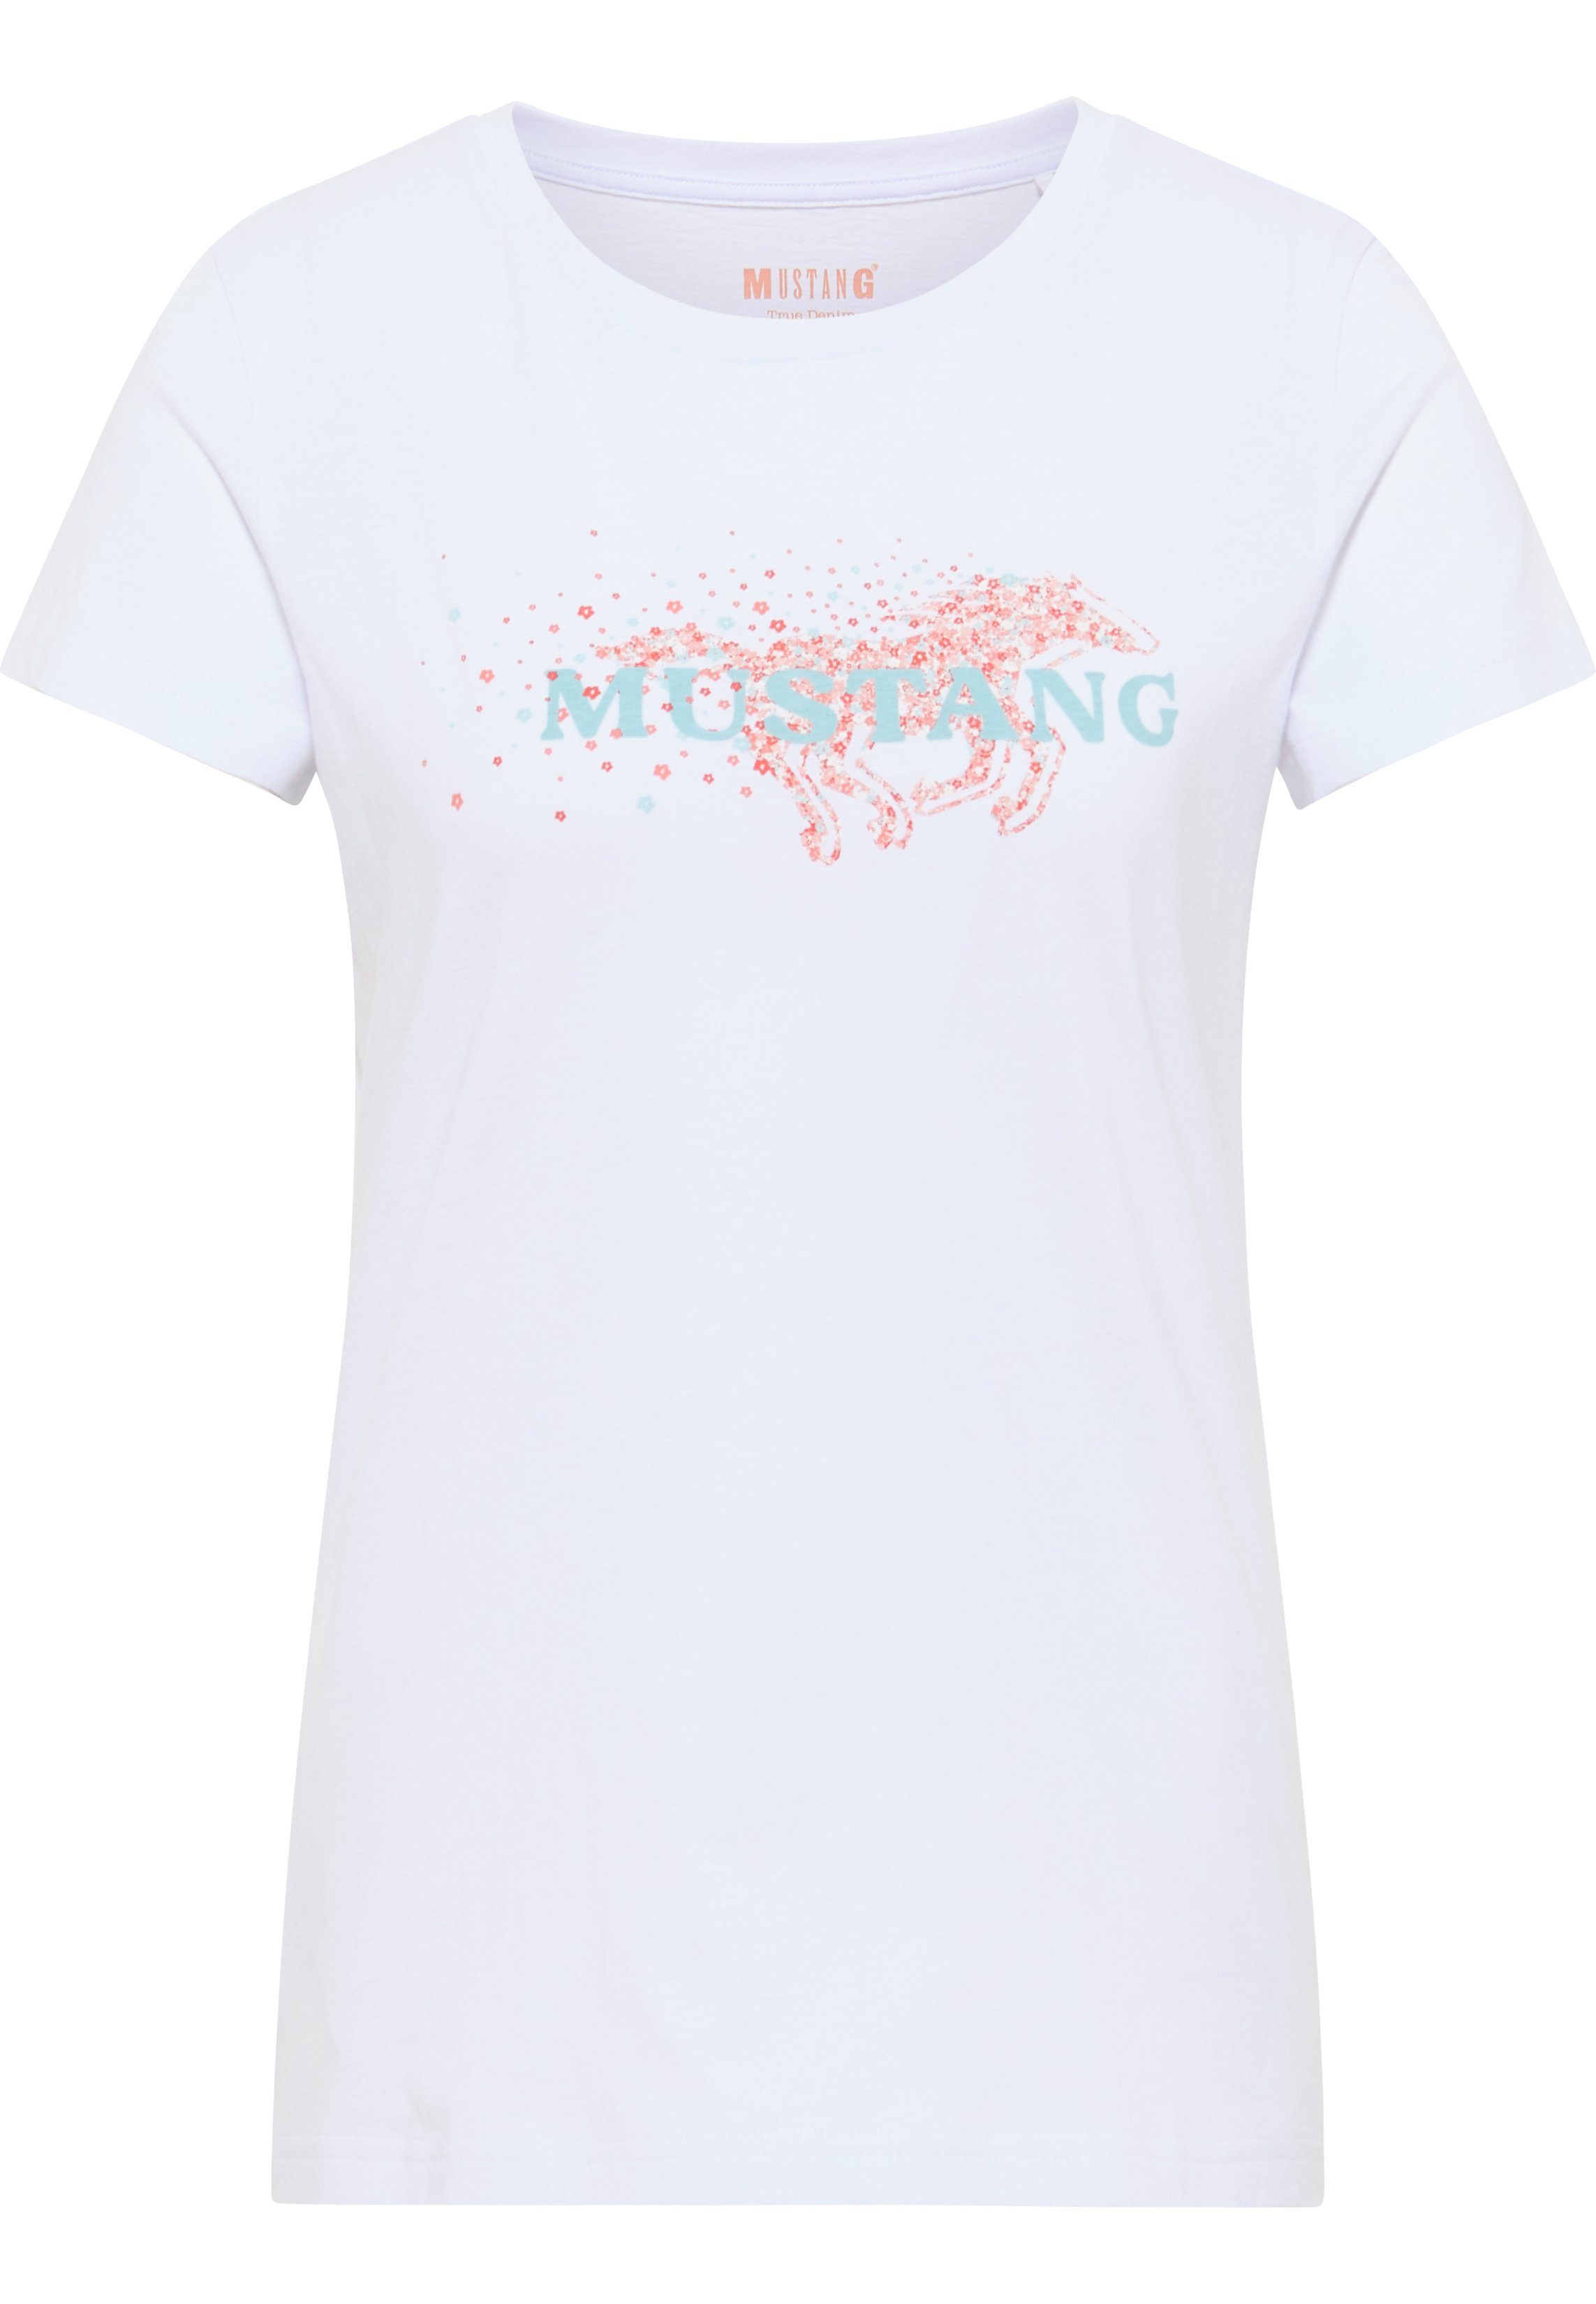 T-Shirt Print Alexia MUSTANG C weiß